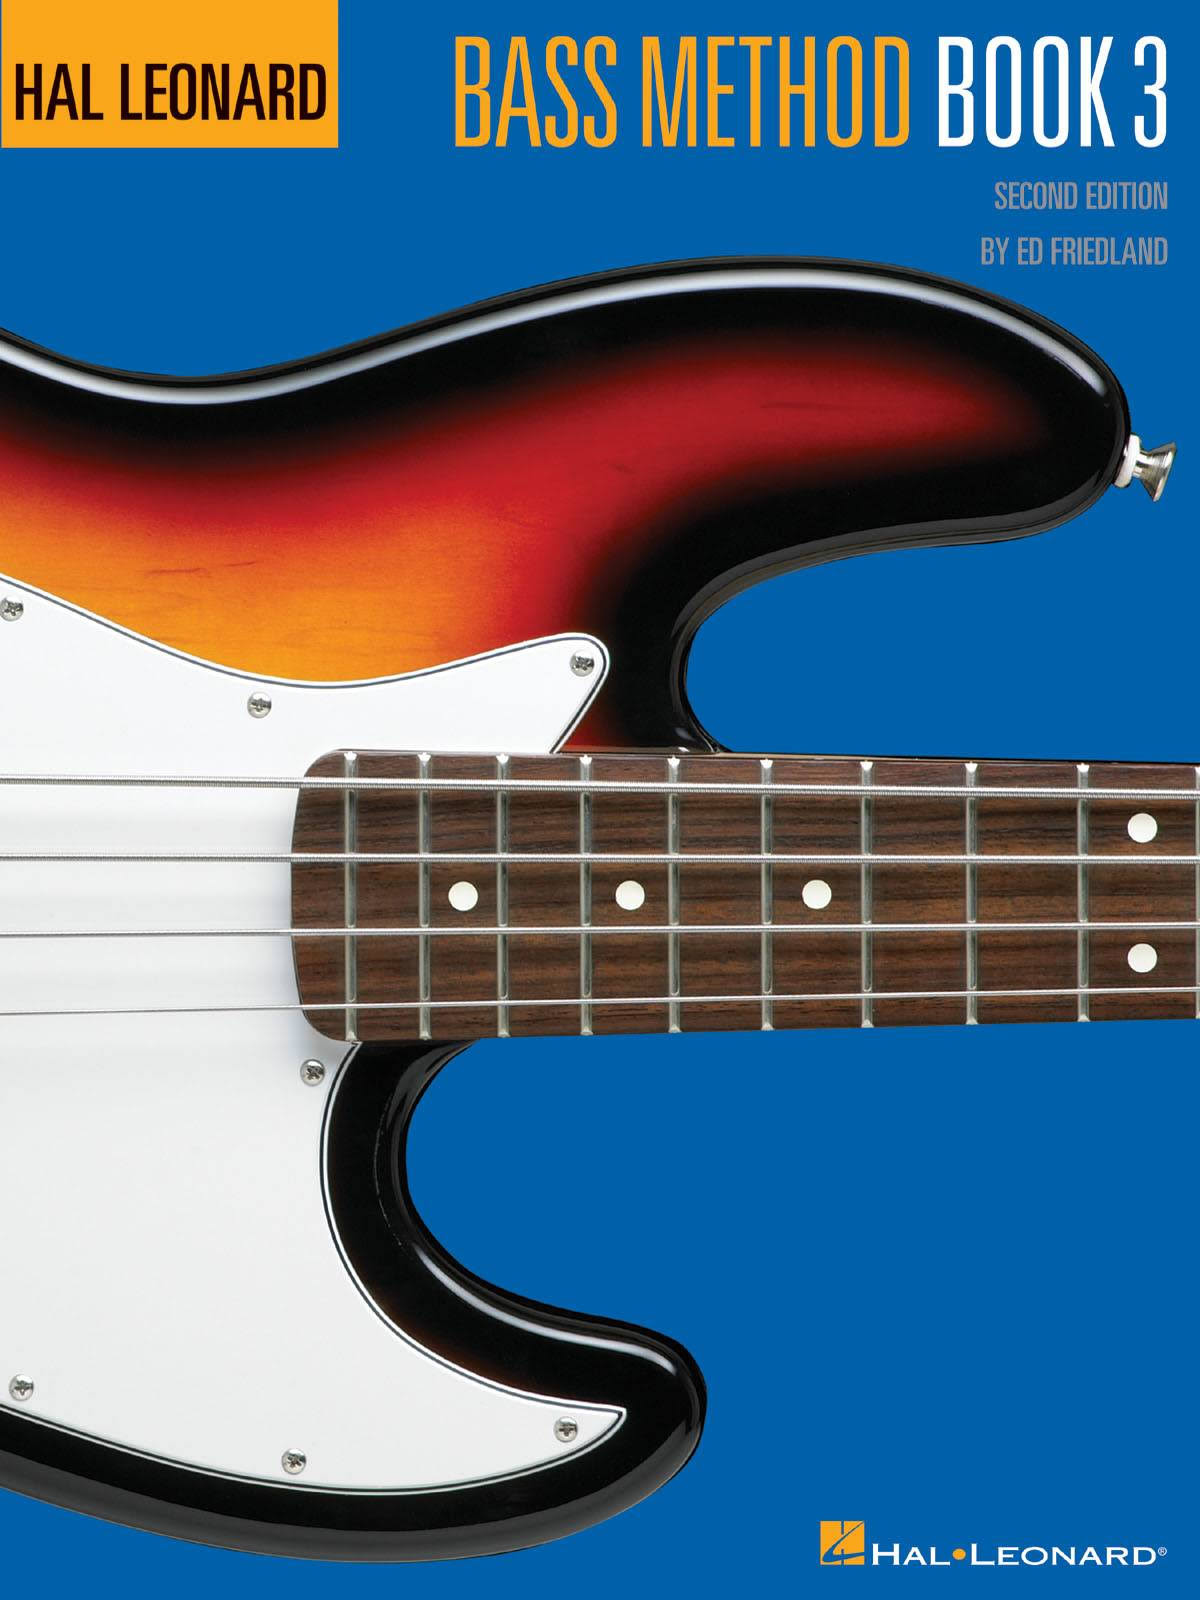 Hal Leonard Bass Method Book 3 - 2nd Edition Instructional Book